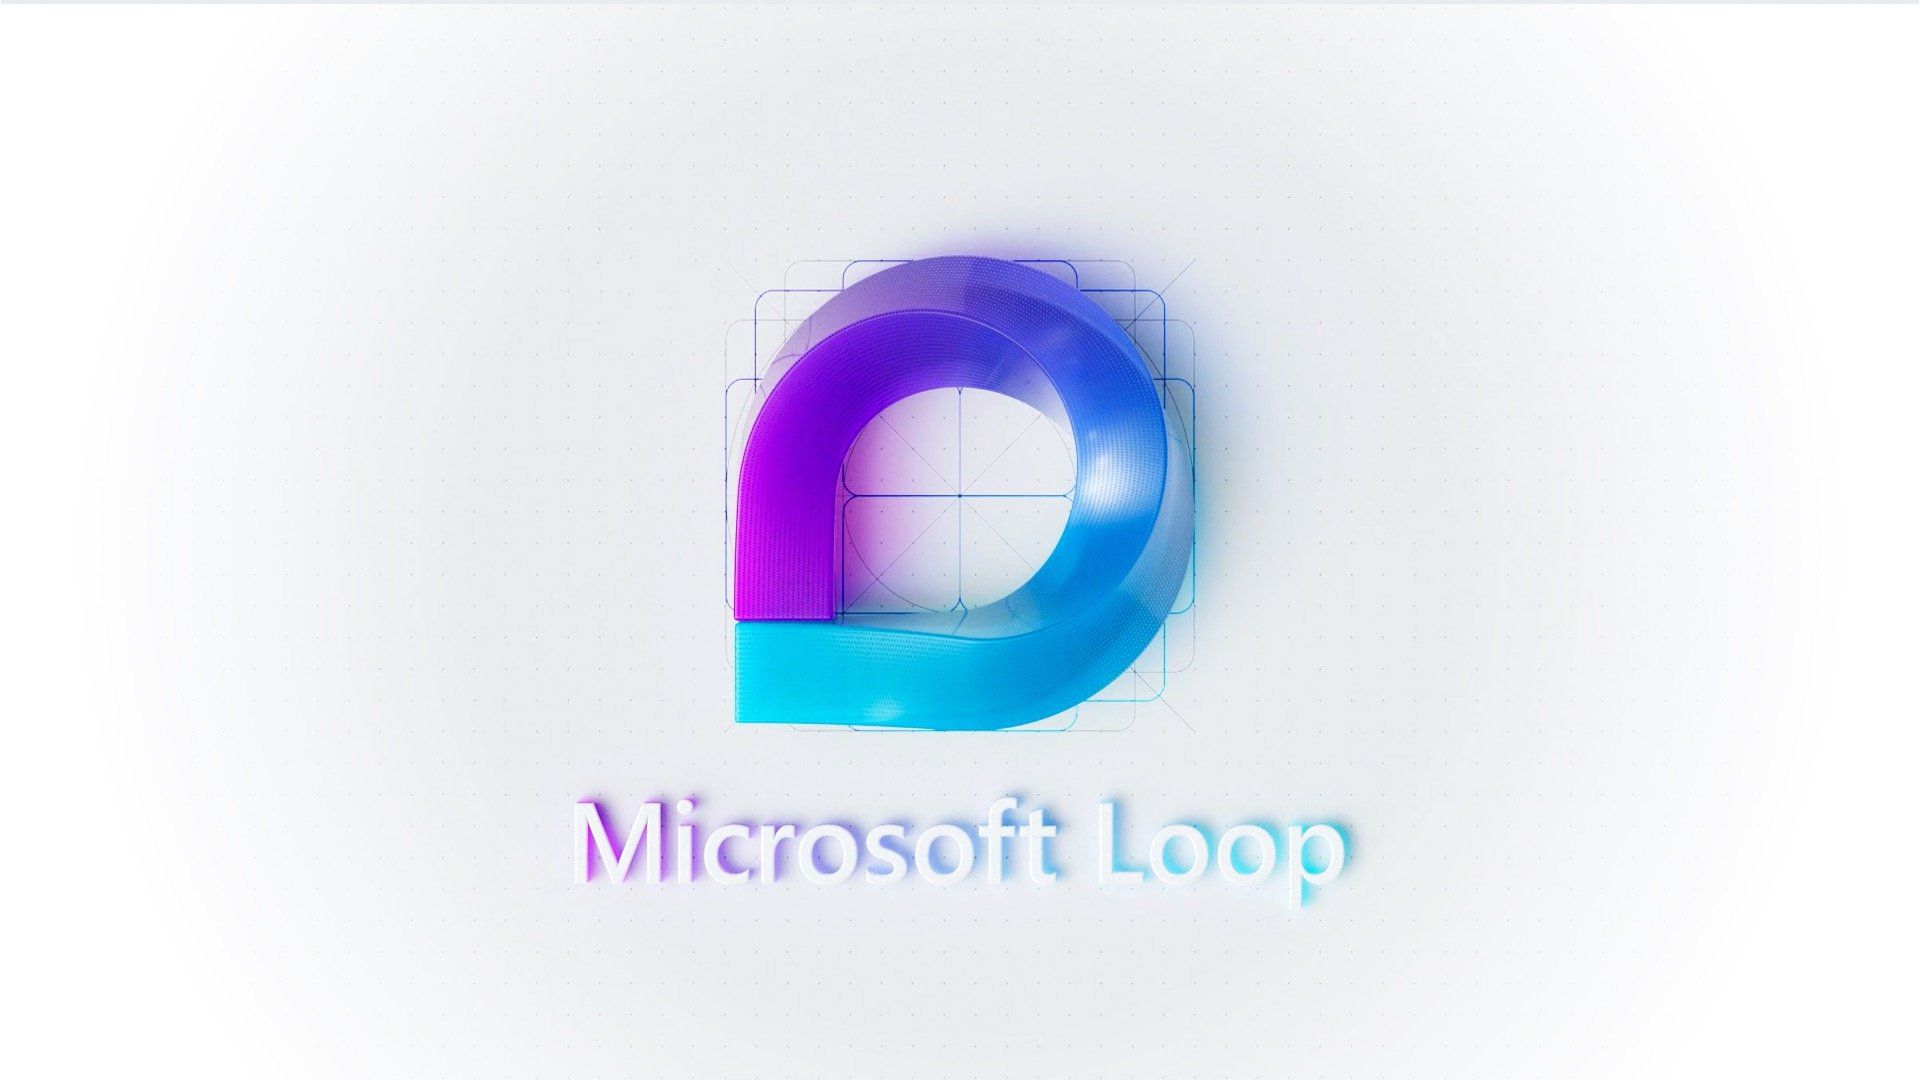 Microsoft Loop cover slide design